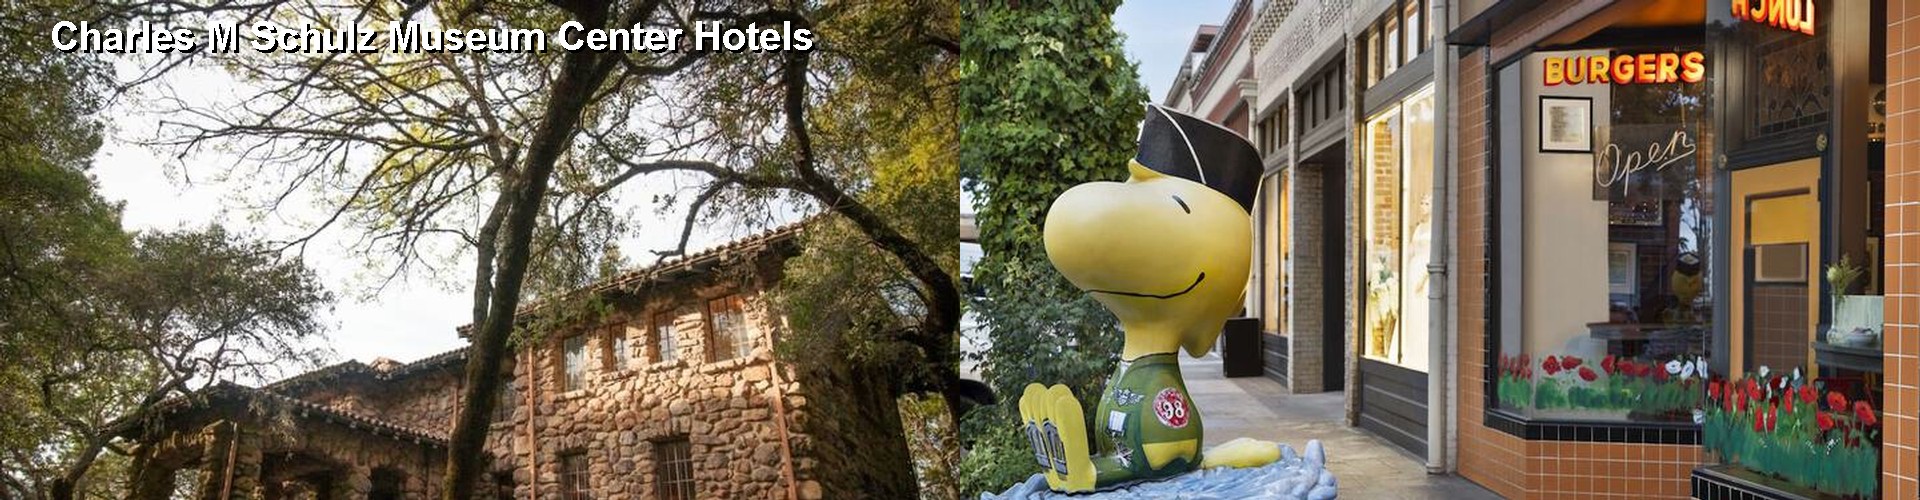 5 Best Hotels near Charles M Schulz Museum Center